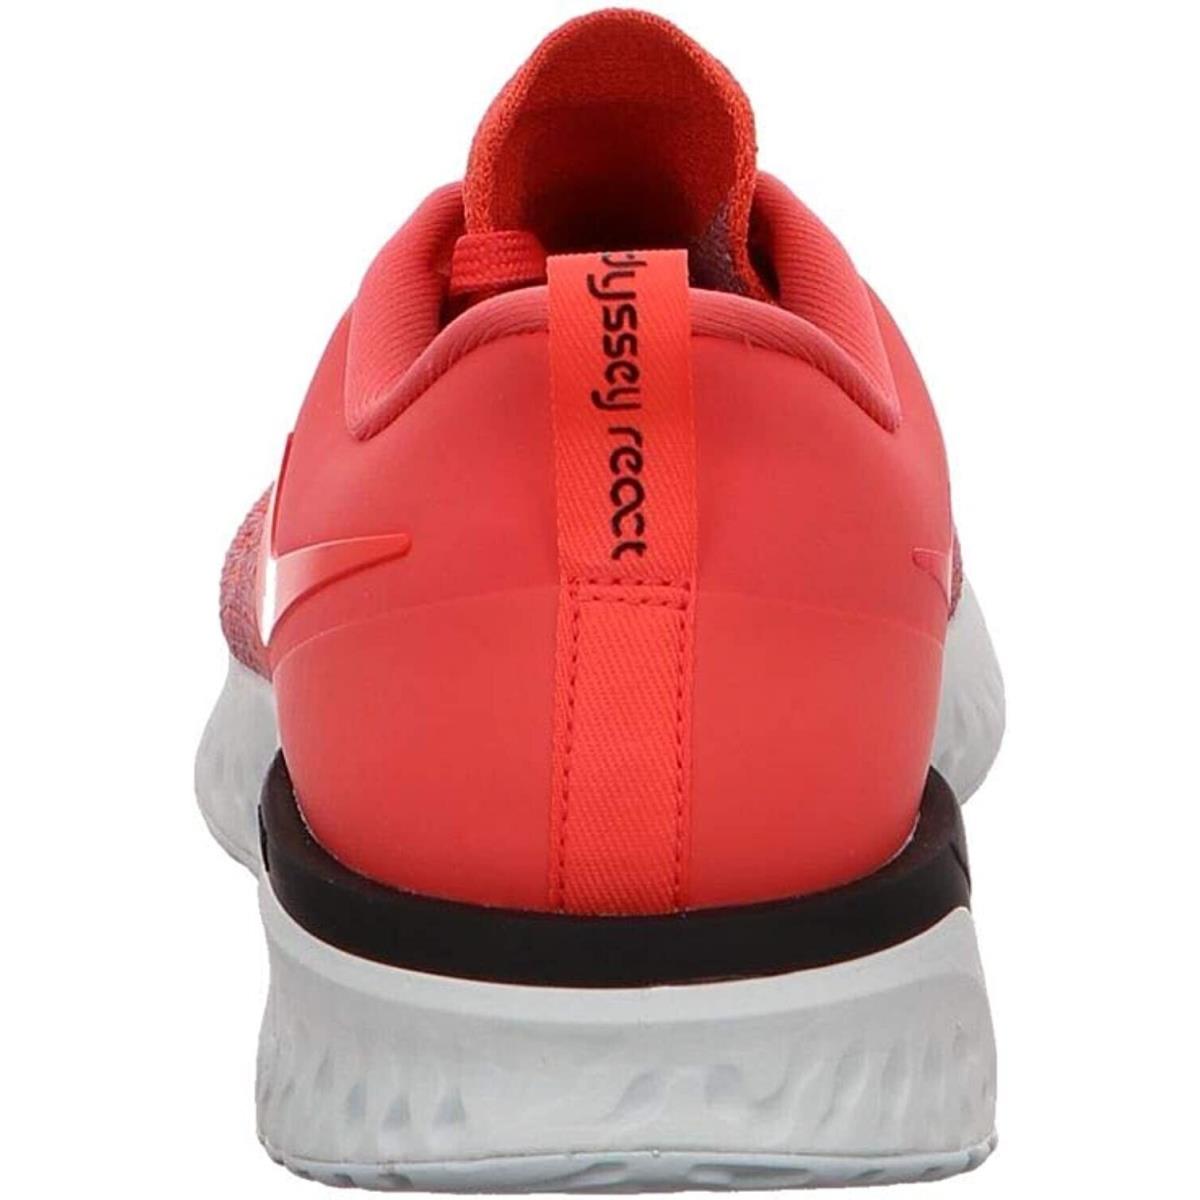 Nike shoes  - Color Ember Glow/Red Orbit-Plum Dust Black 1